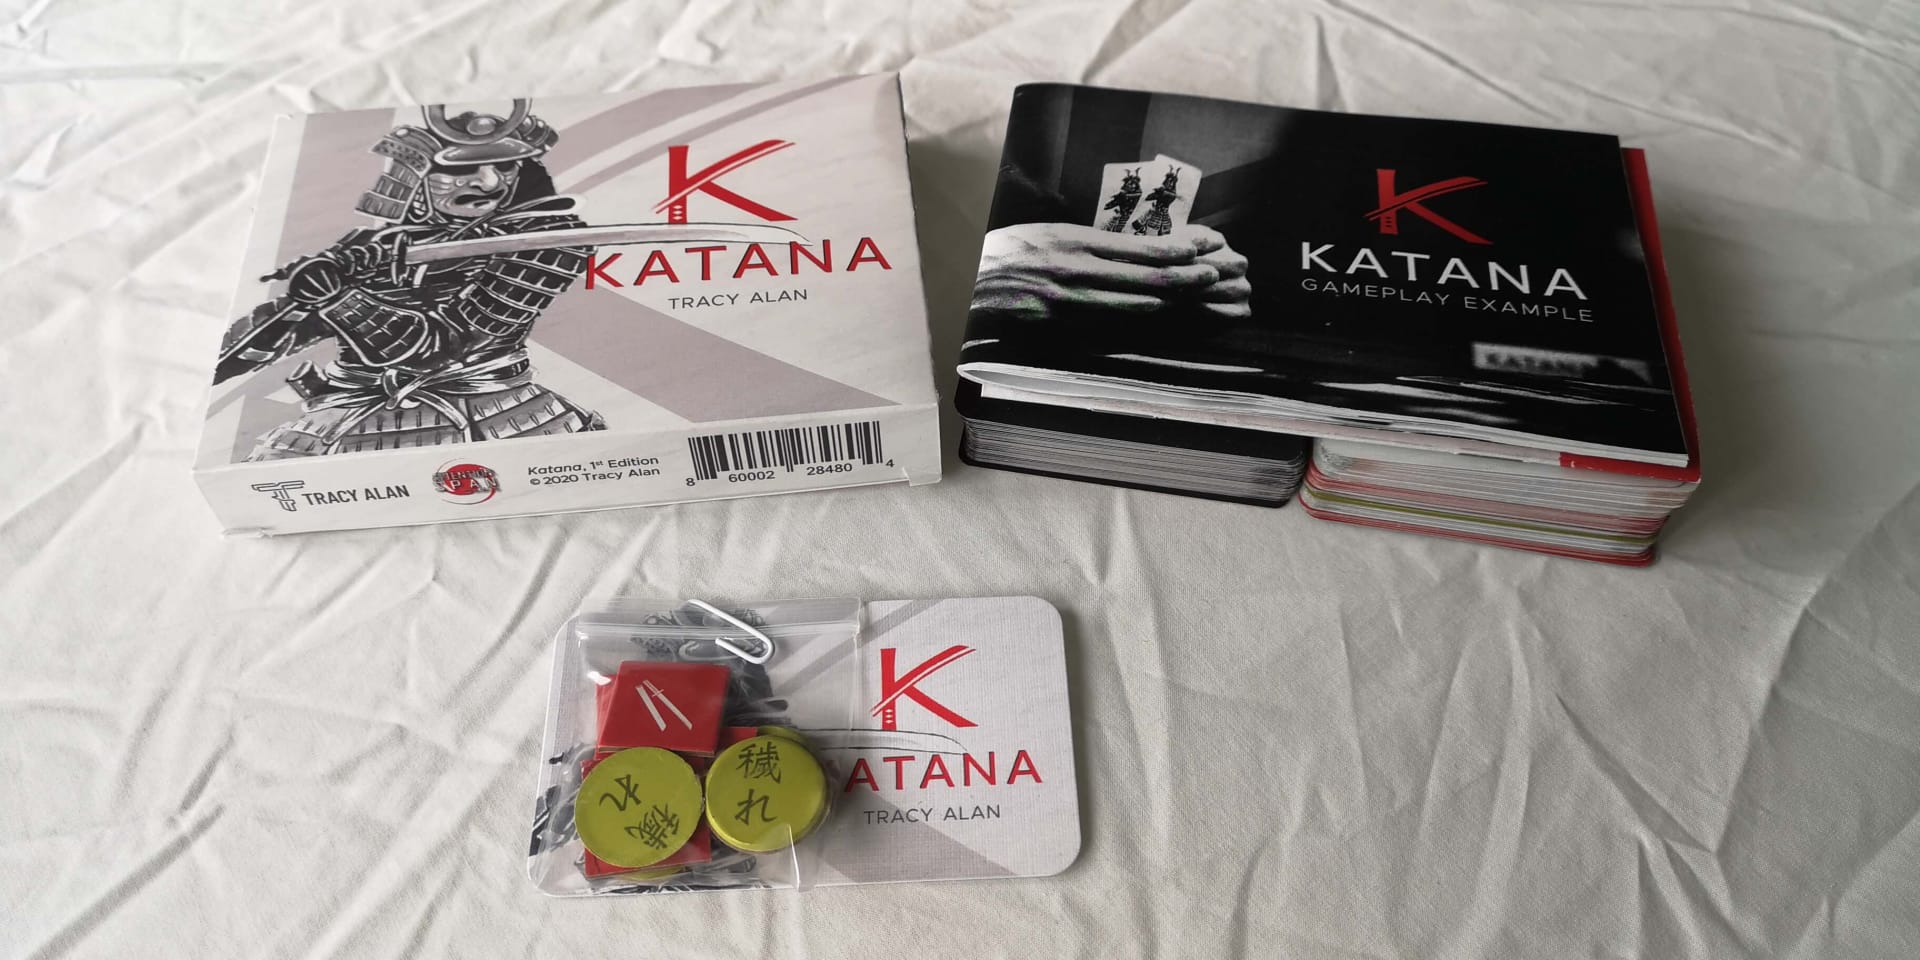 The Katana components.